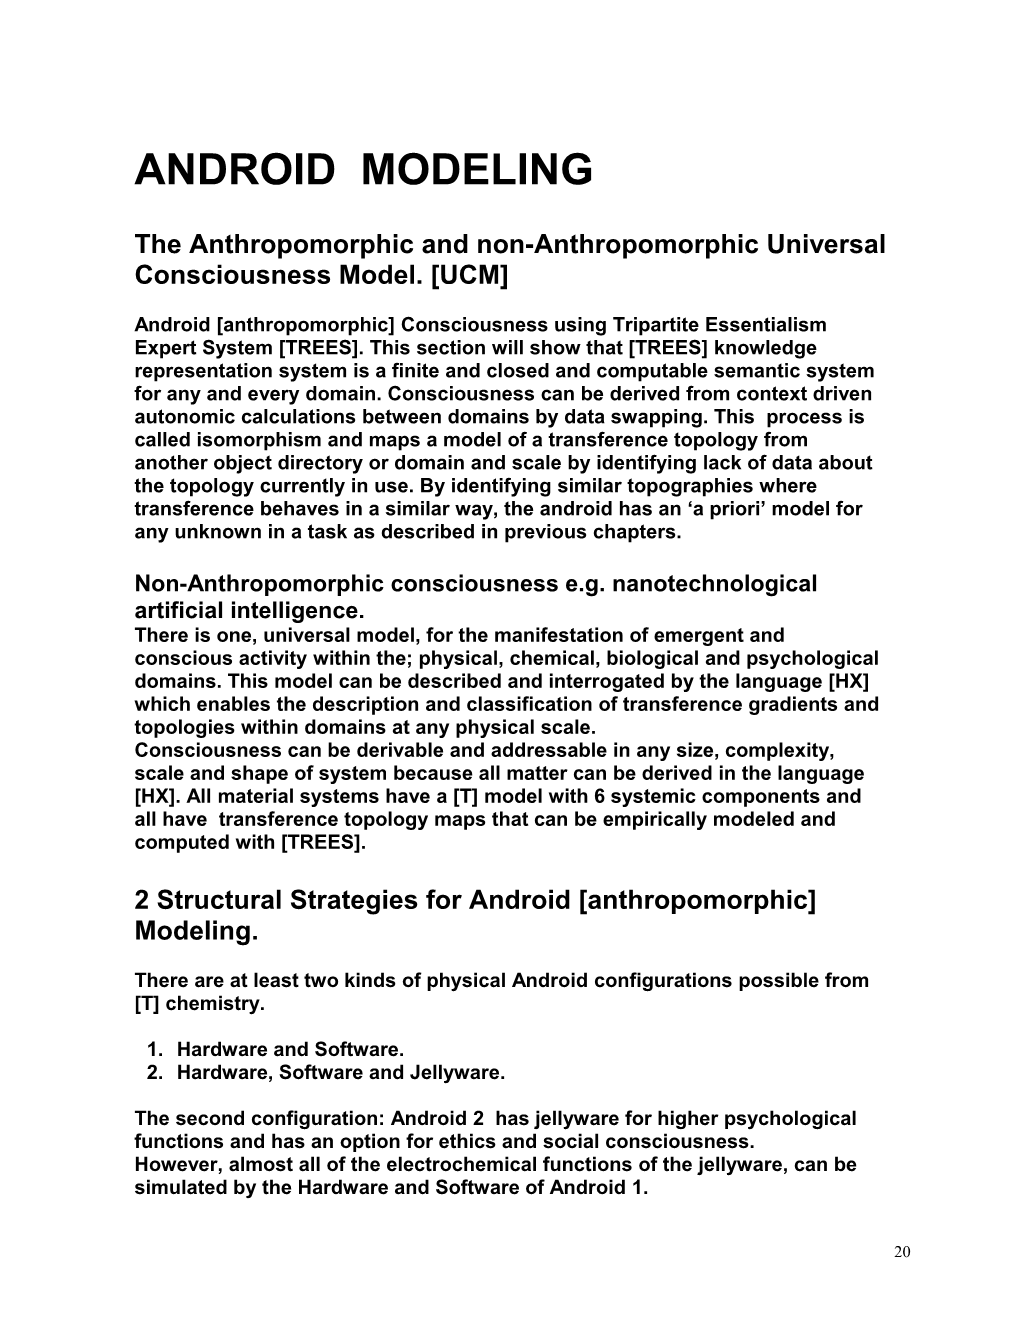 The Anthropomorphic and Non-Anthropomorphic Universal Consciousness Model. UCM